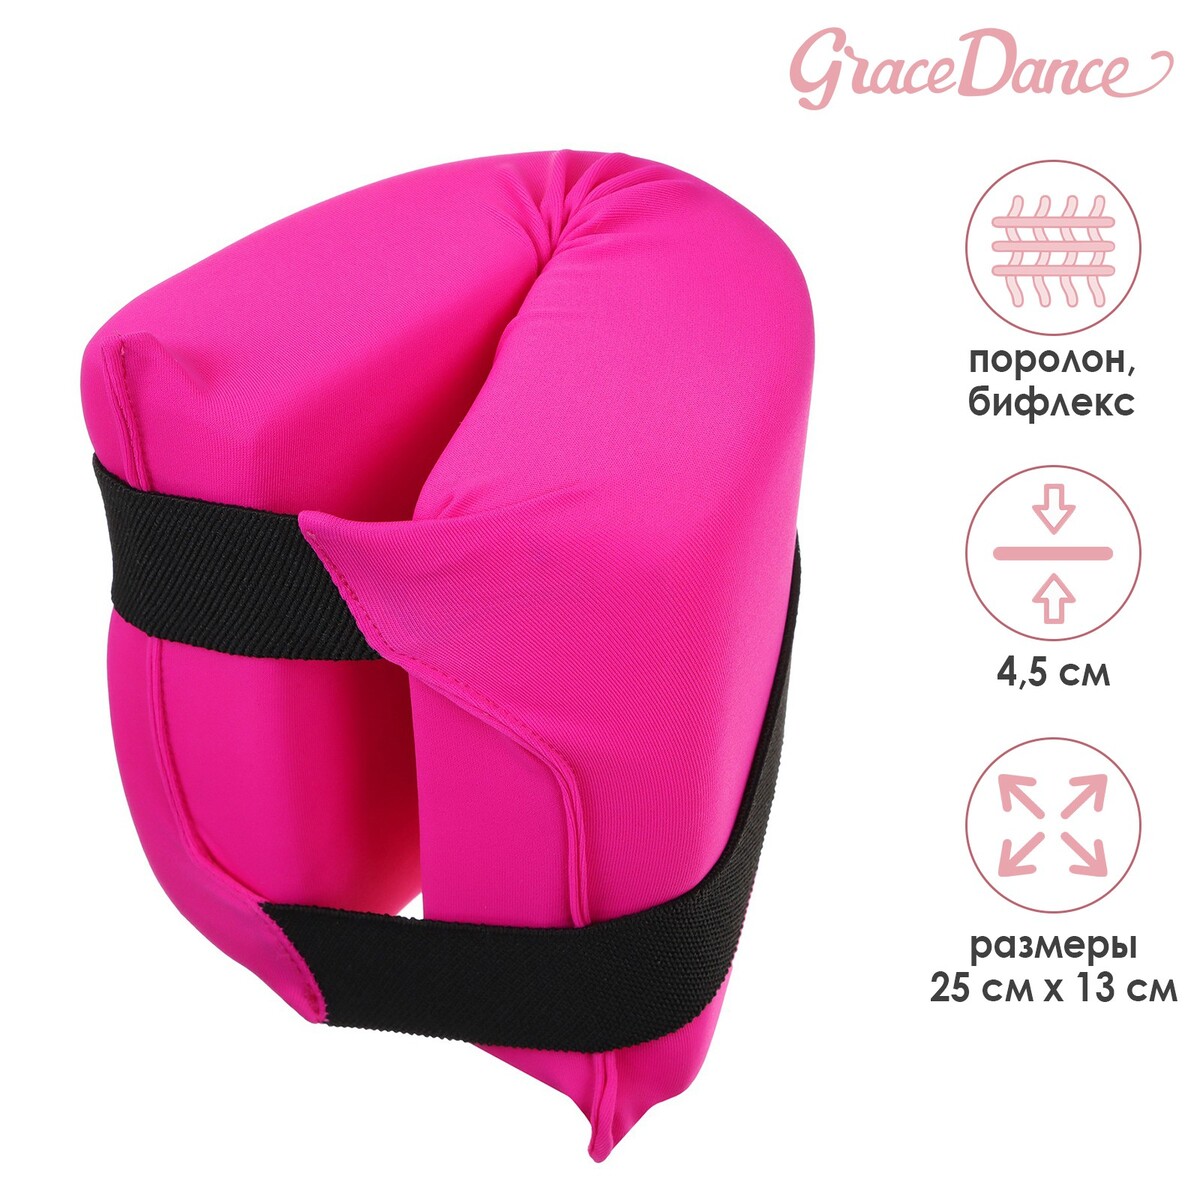 Подушка для растяжки grace dance, цвет фуксия подушка гимнастическая для растяжки grace dance 38х25 см розовый